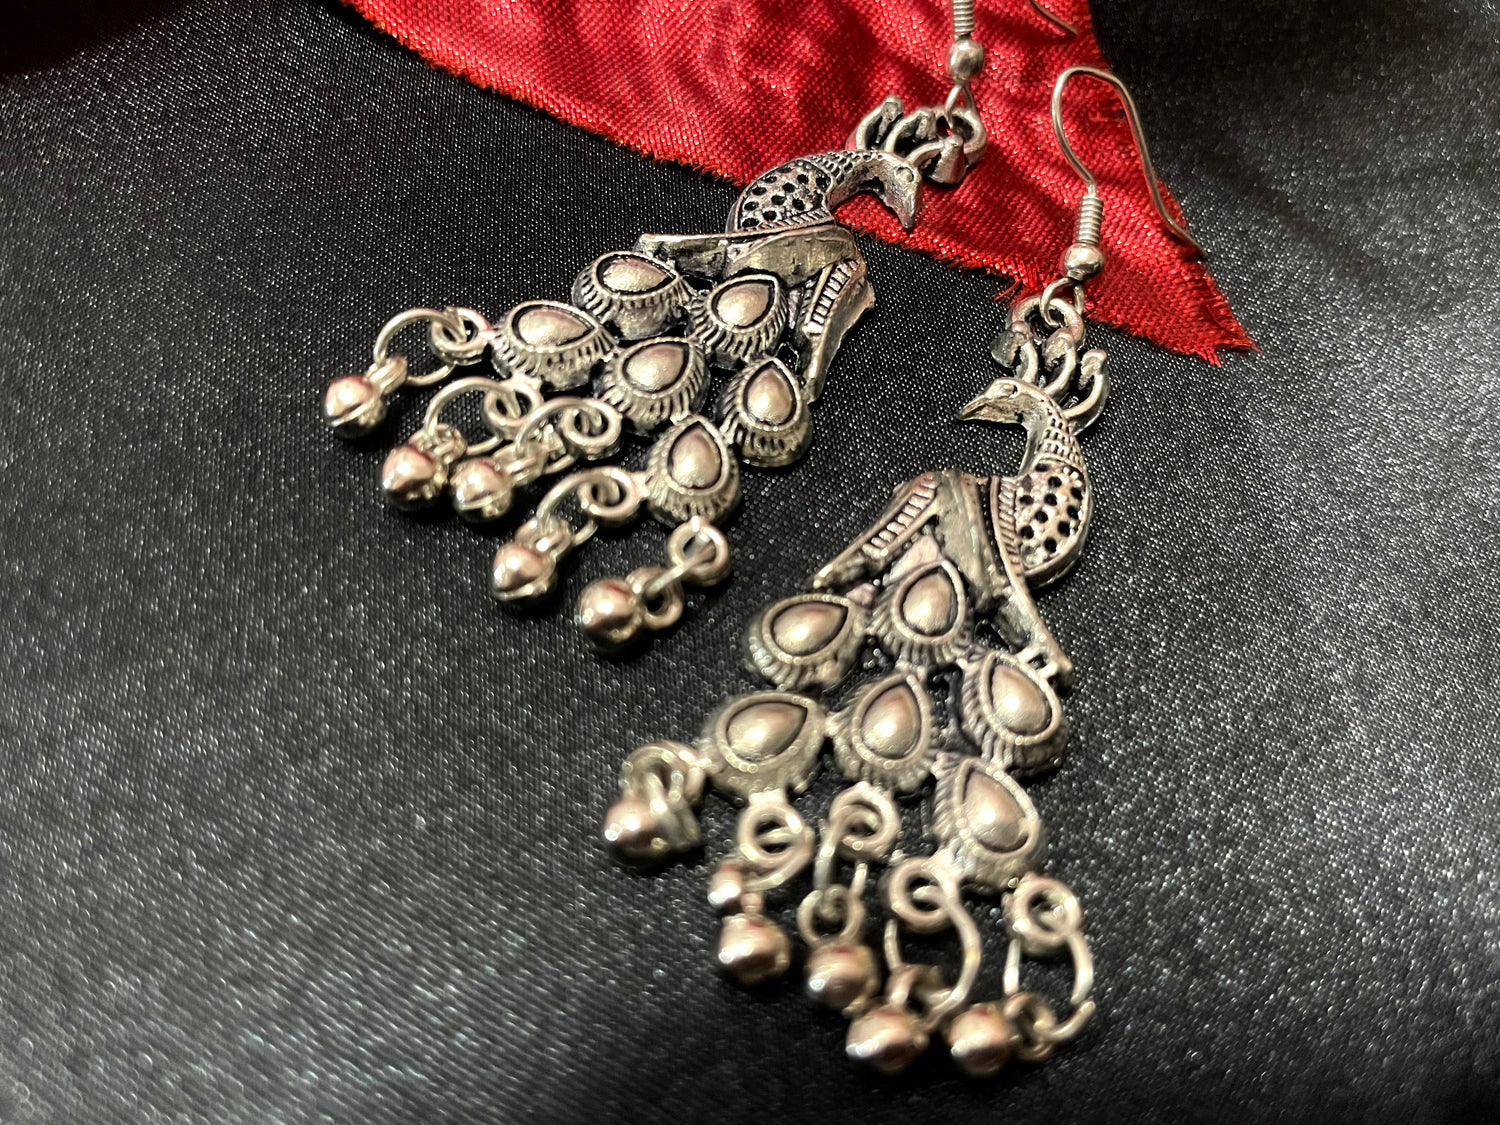 Handcrafted earring peacock design dangle drop lightweight jewelry